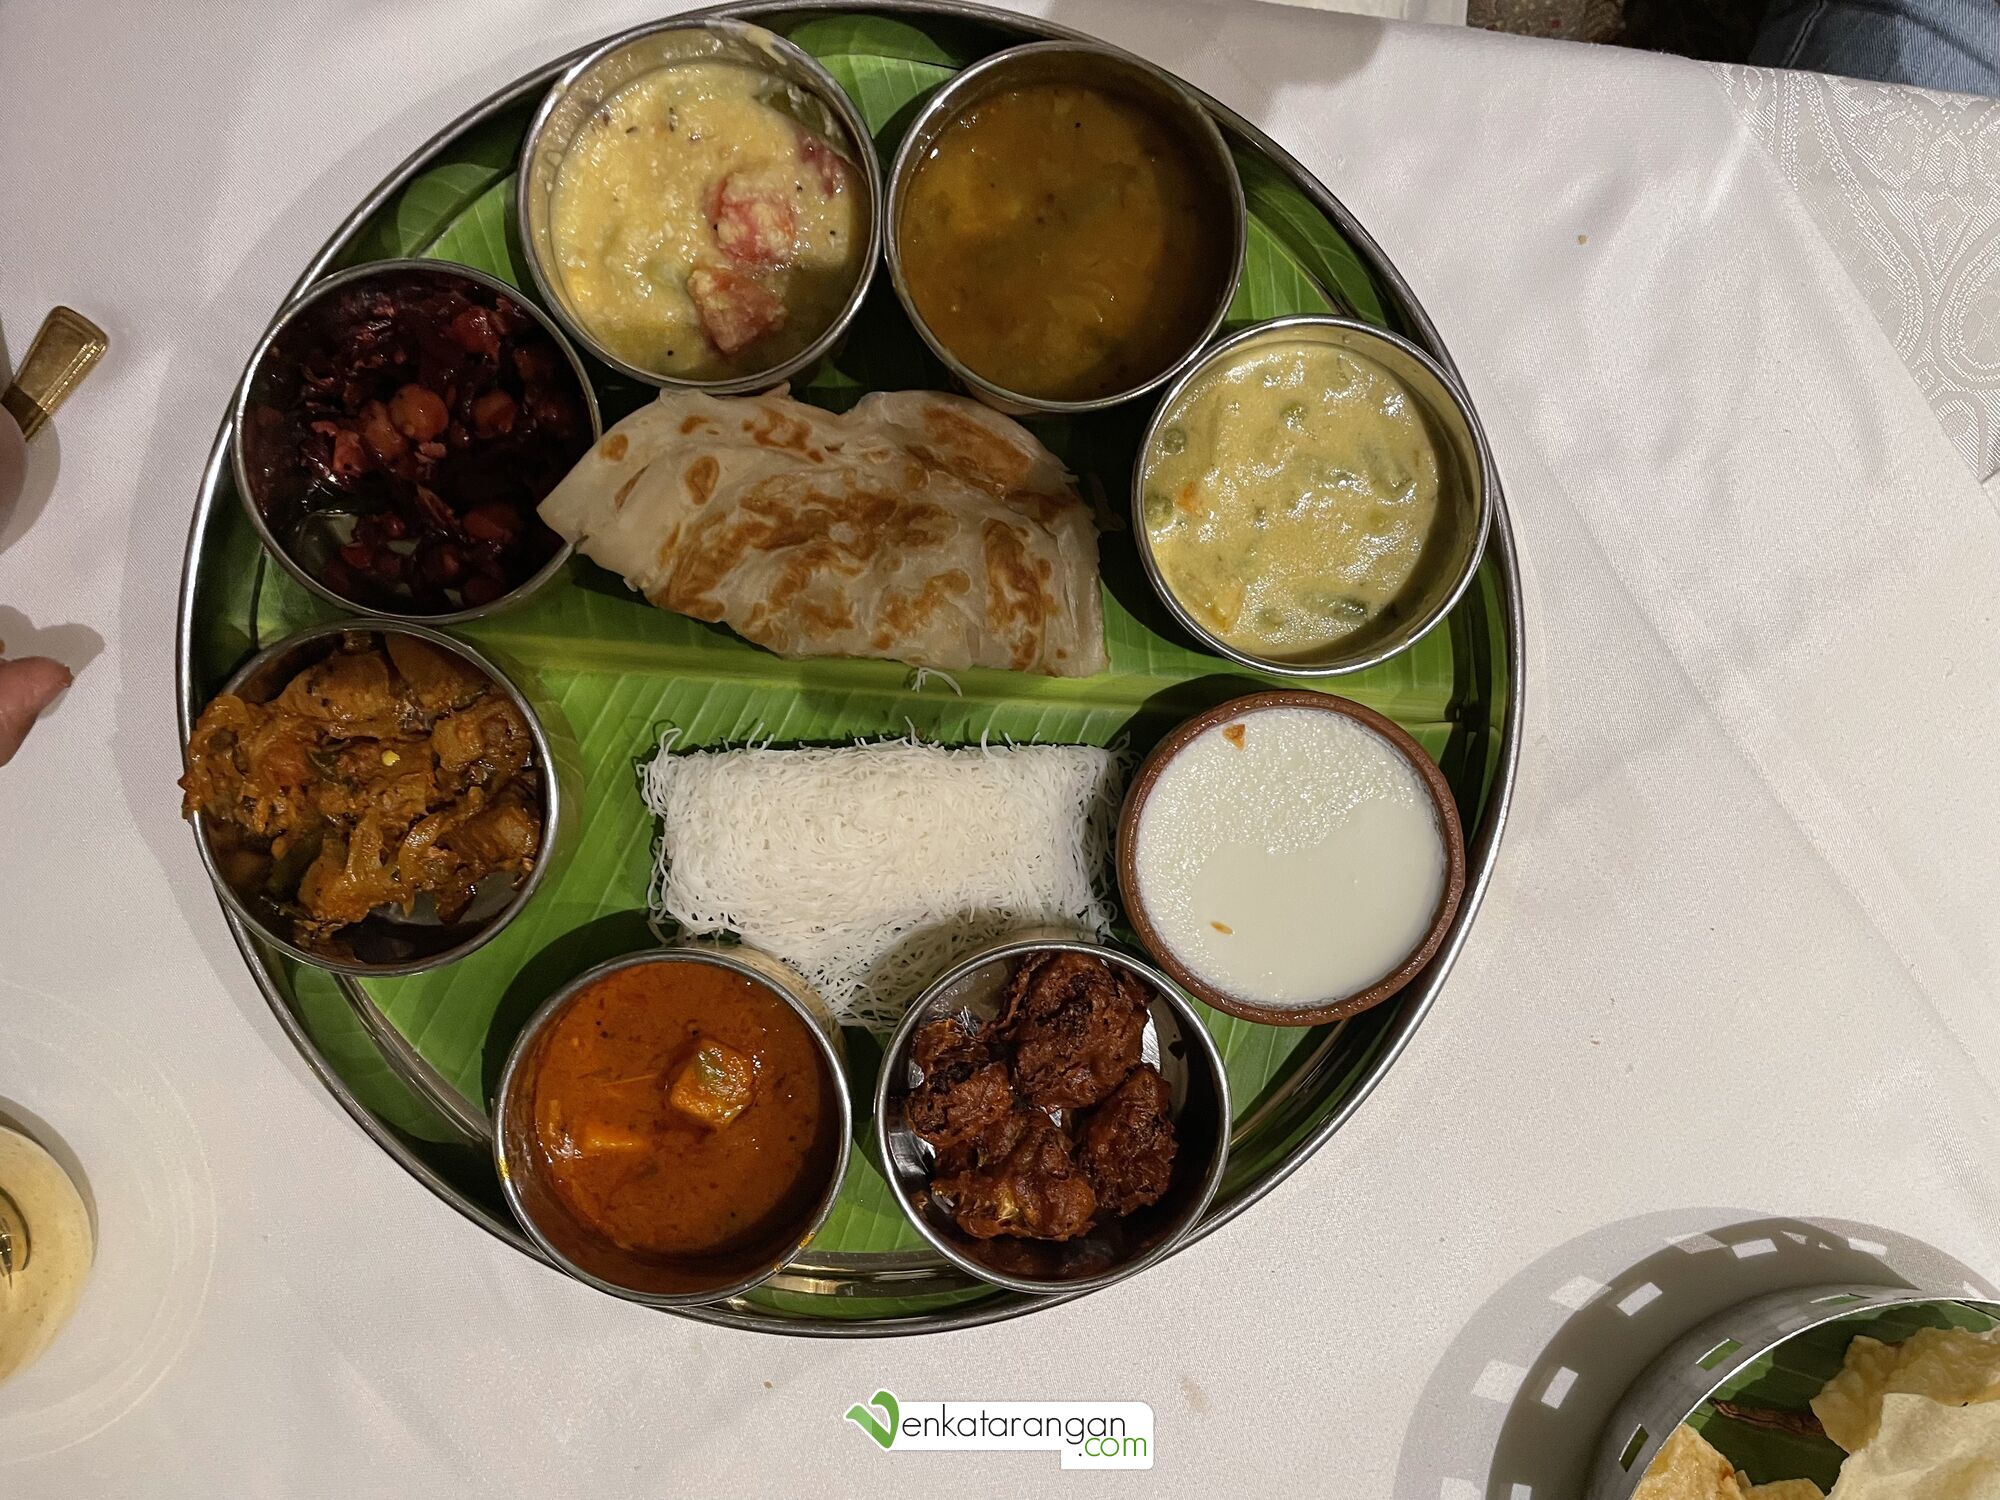 Vegetarian main course – Kerala Parotta, Idiyappam, followed by coconut rice and white rice, accompanied with Sambar, Rasam, Currys and Cauliflower pakkoda